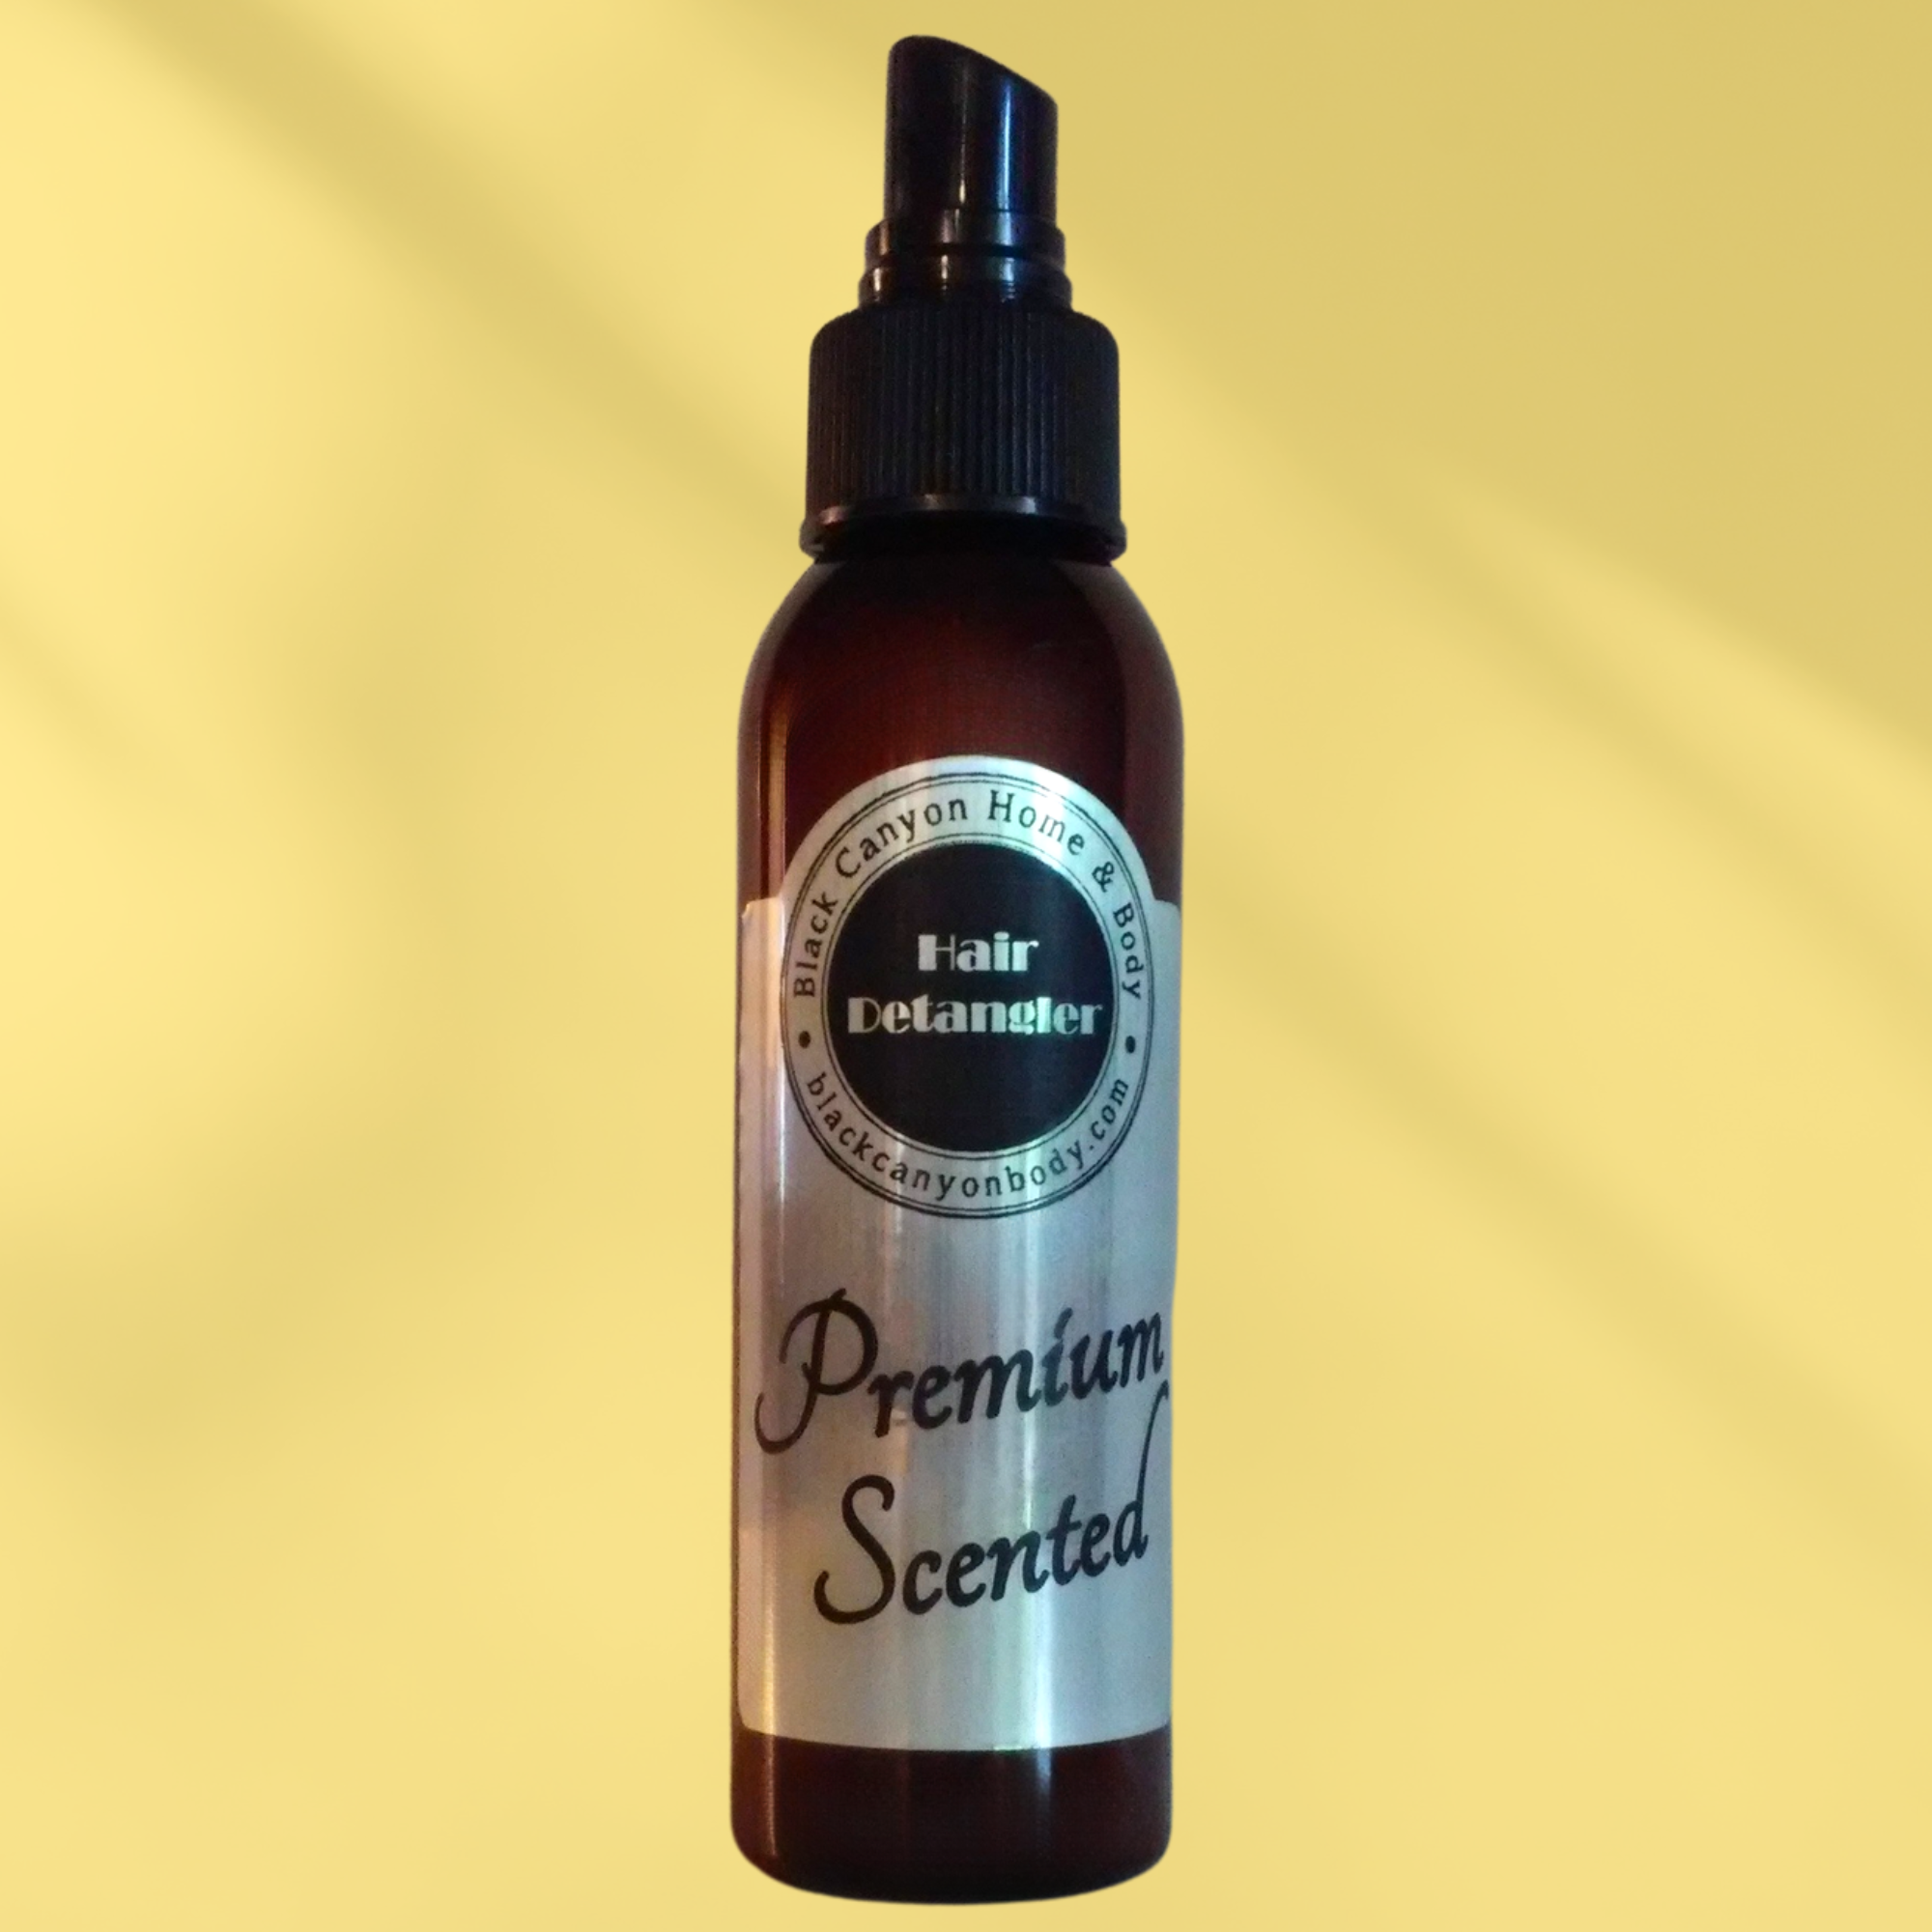 Black Canyon Estrella Scented Hair Detangler Spray with Olive Oil